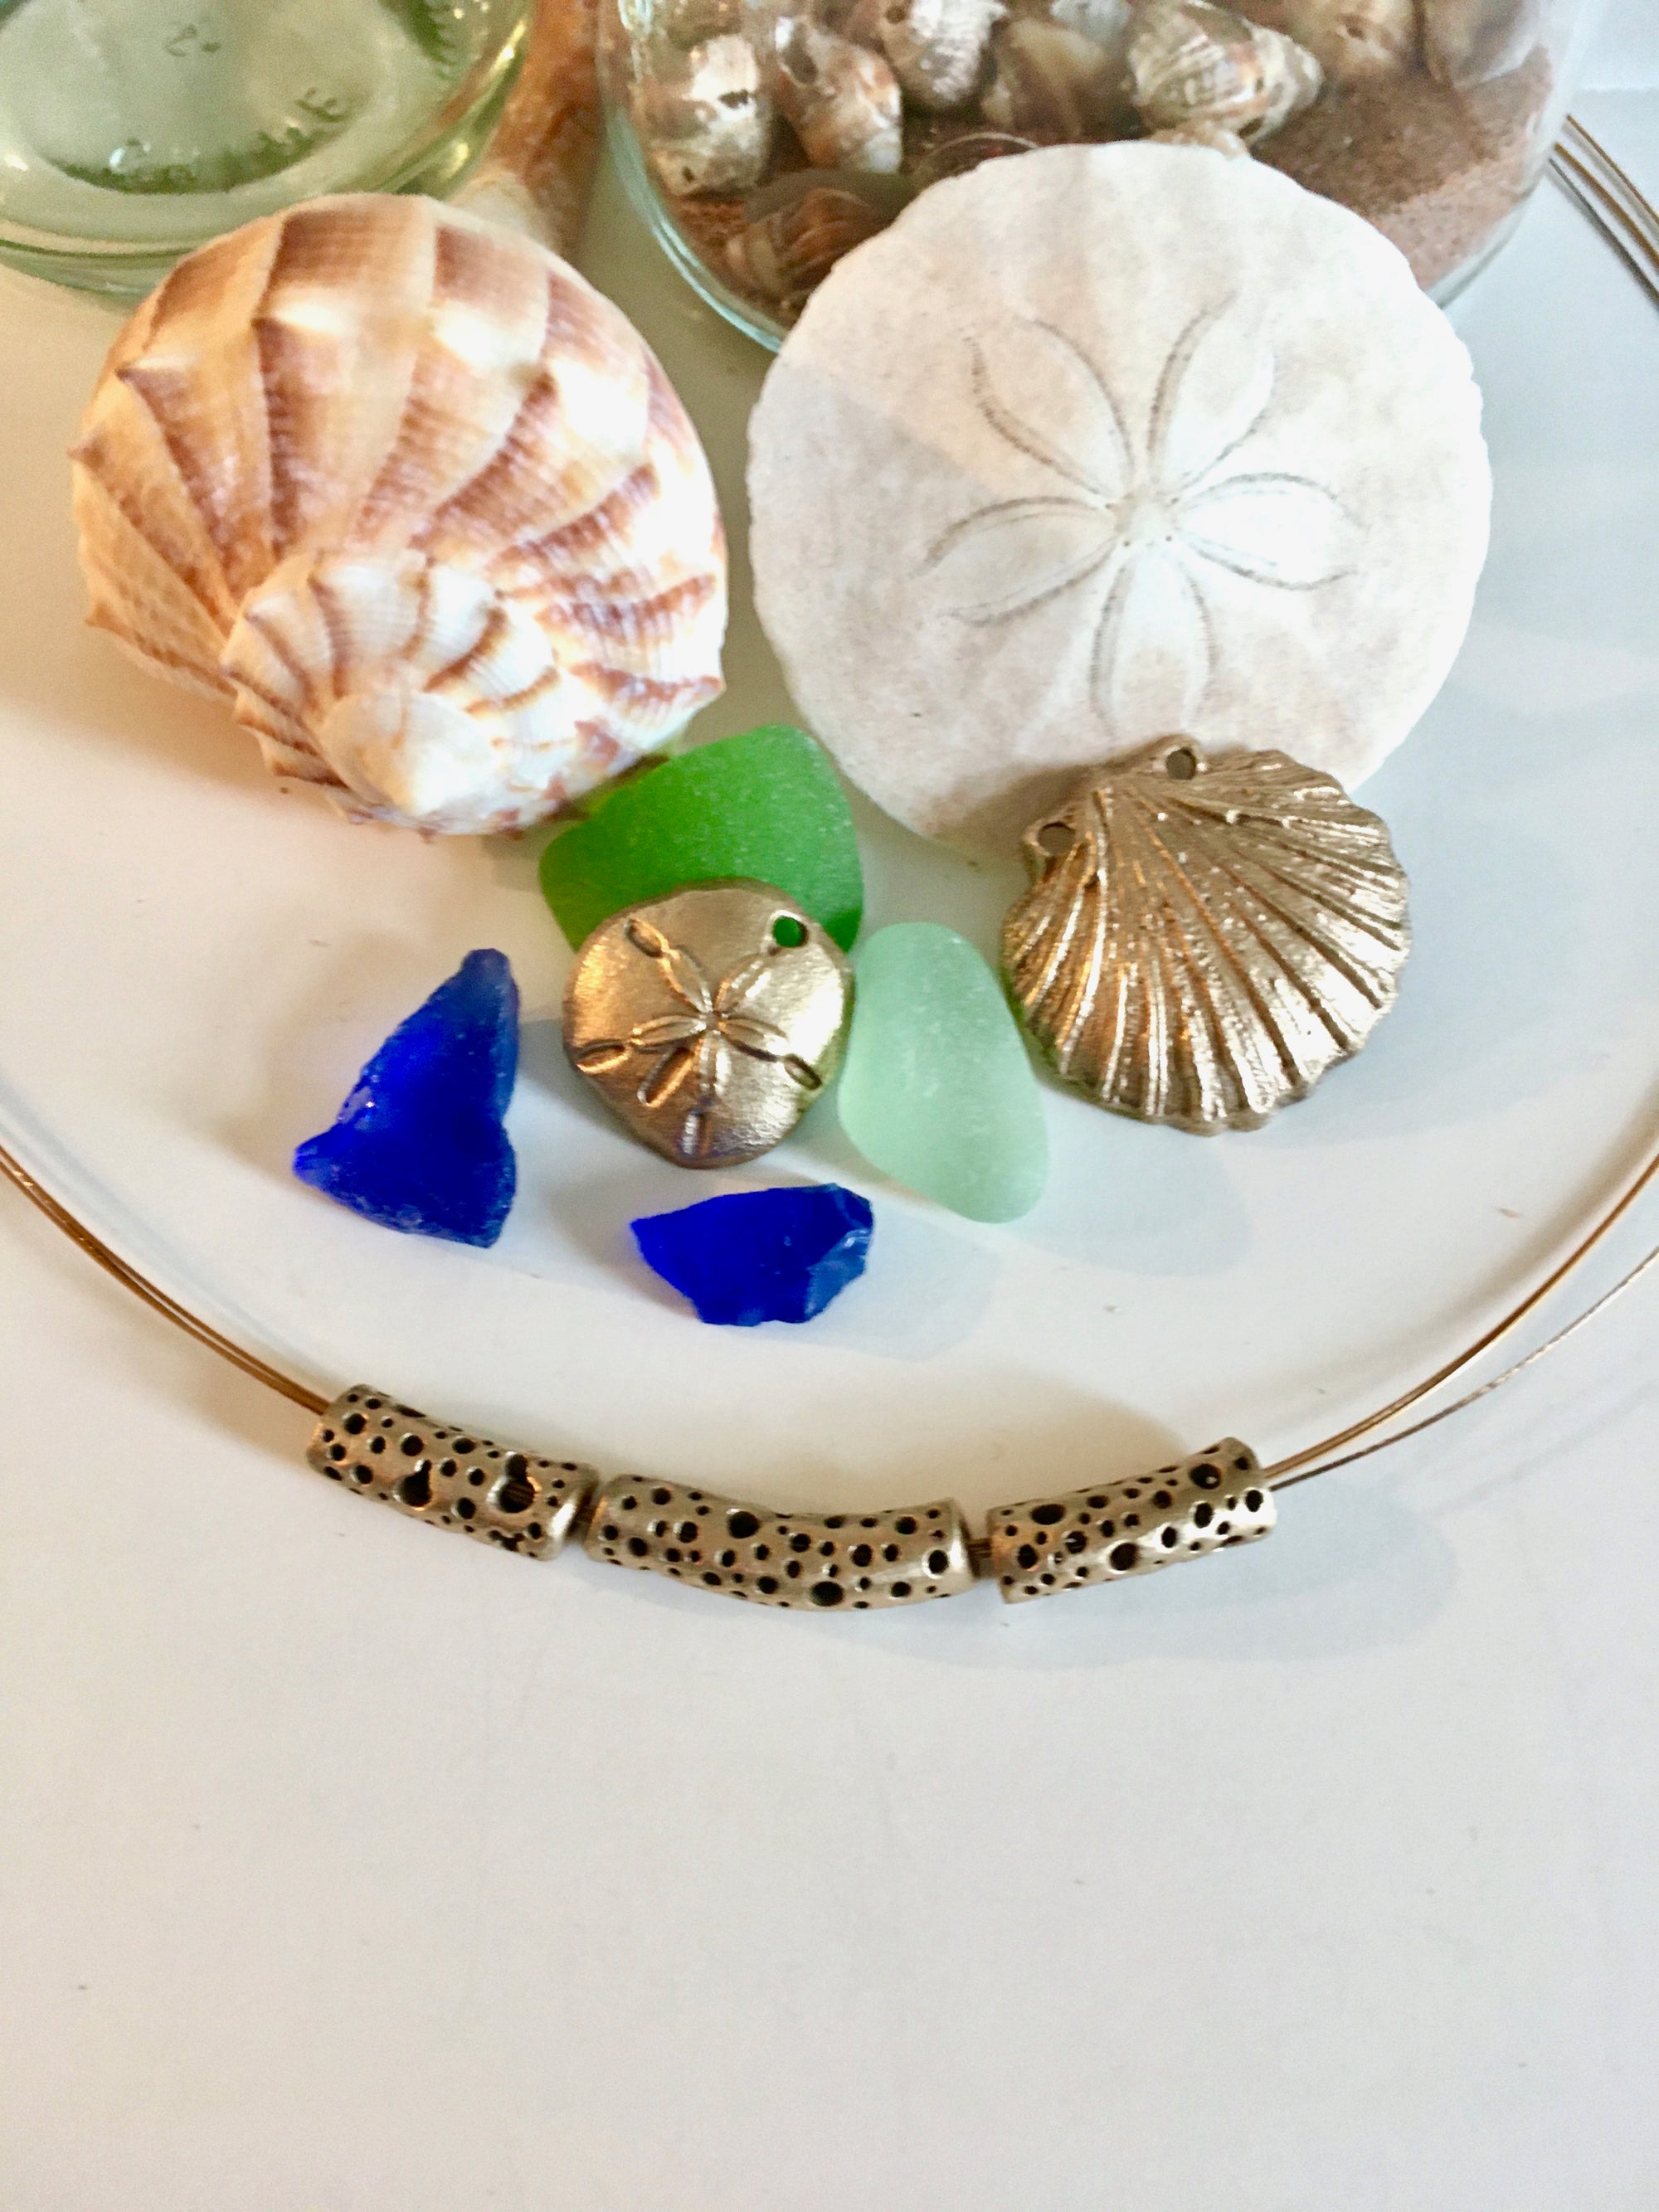 Coral reef bead necklaces